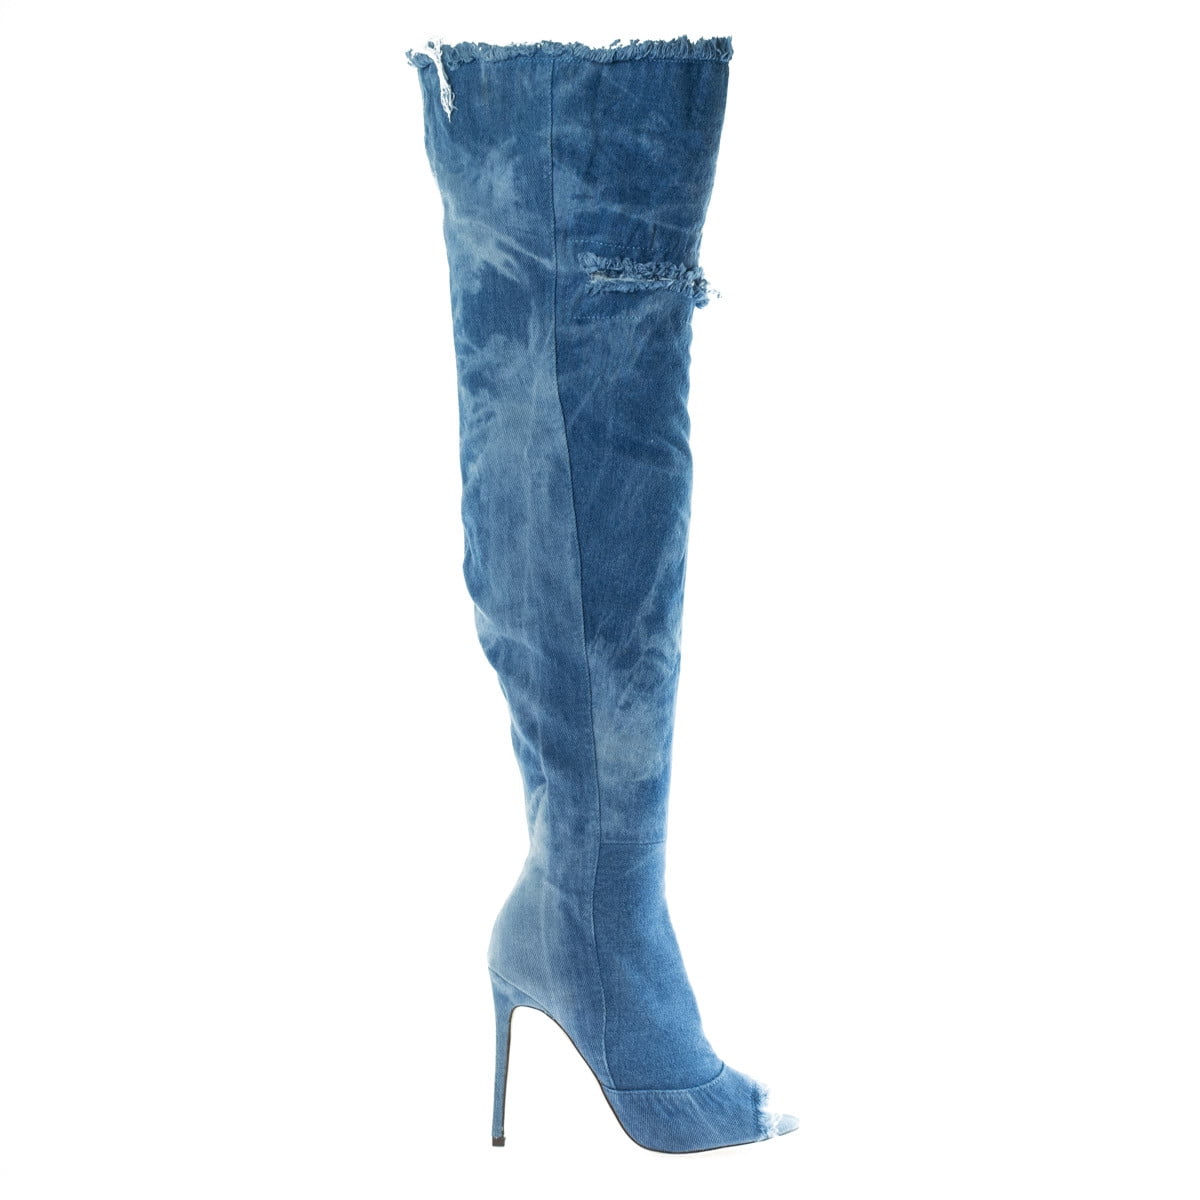 dark blue thigh high boots